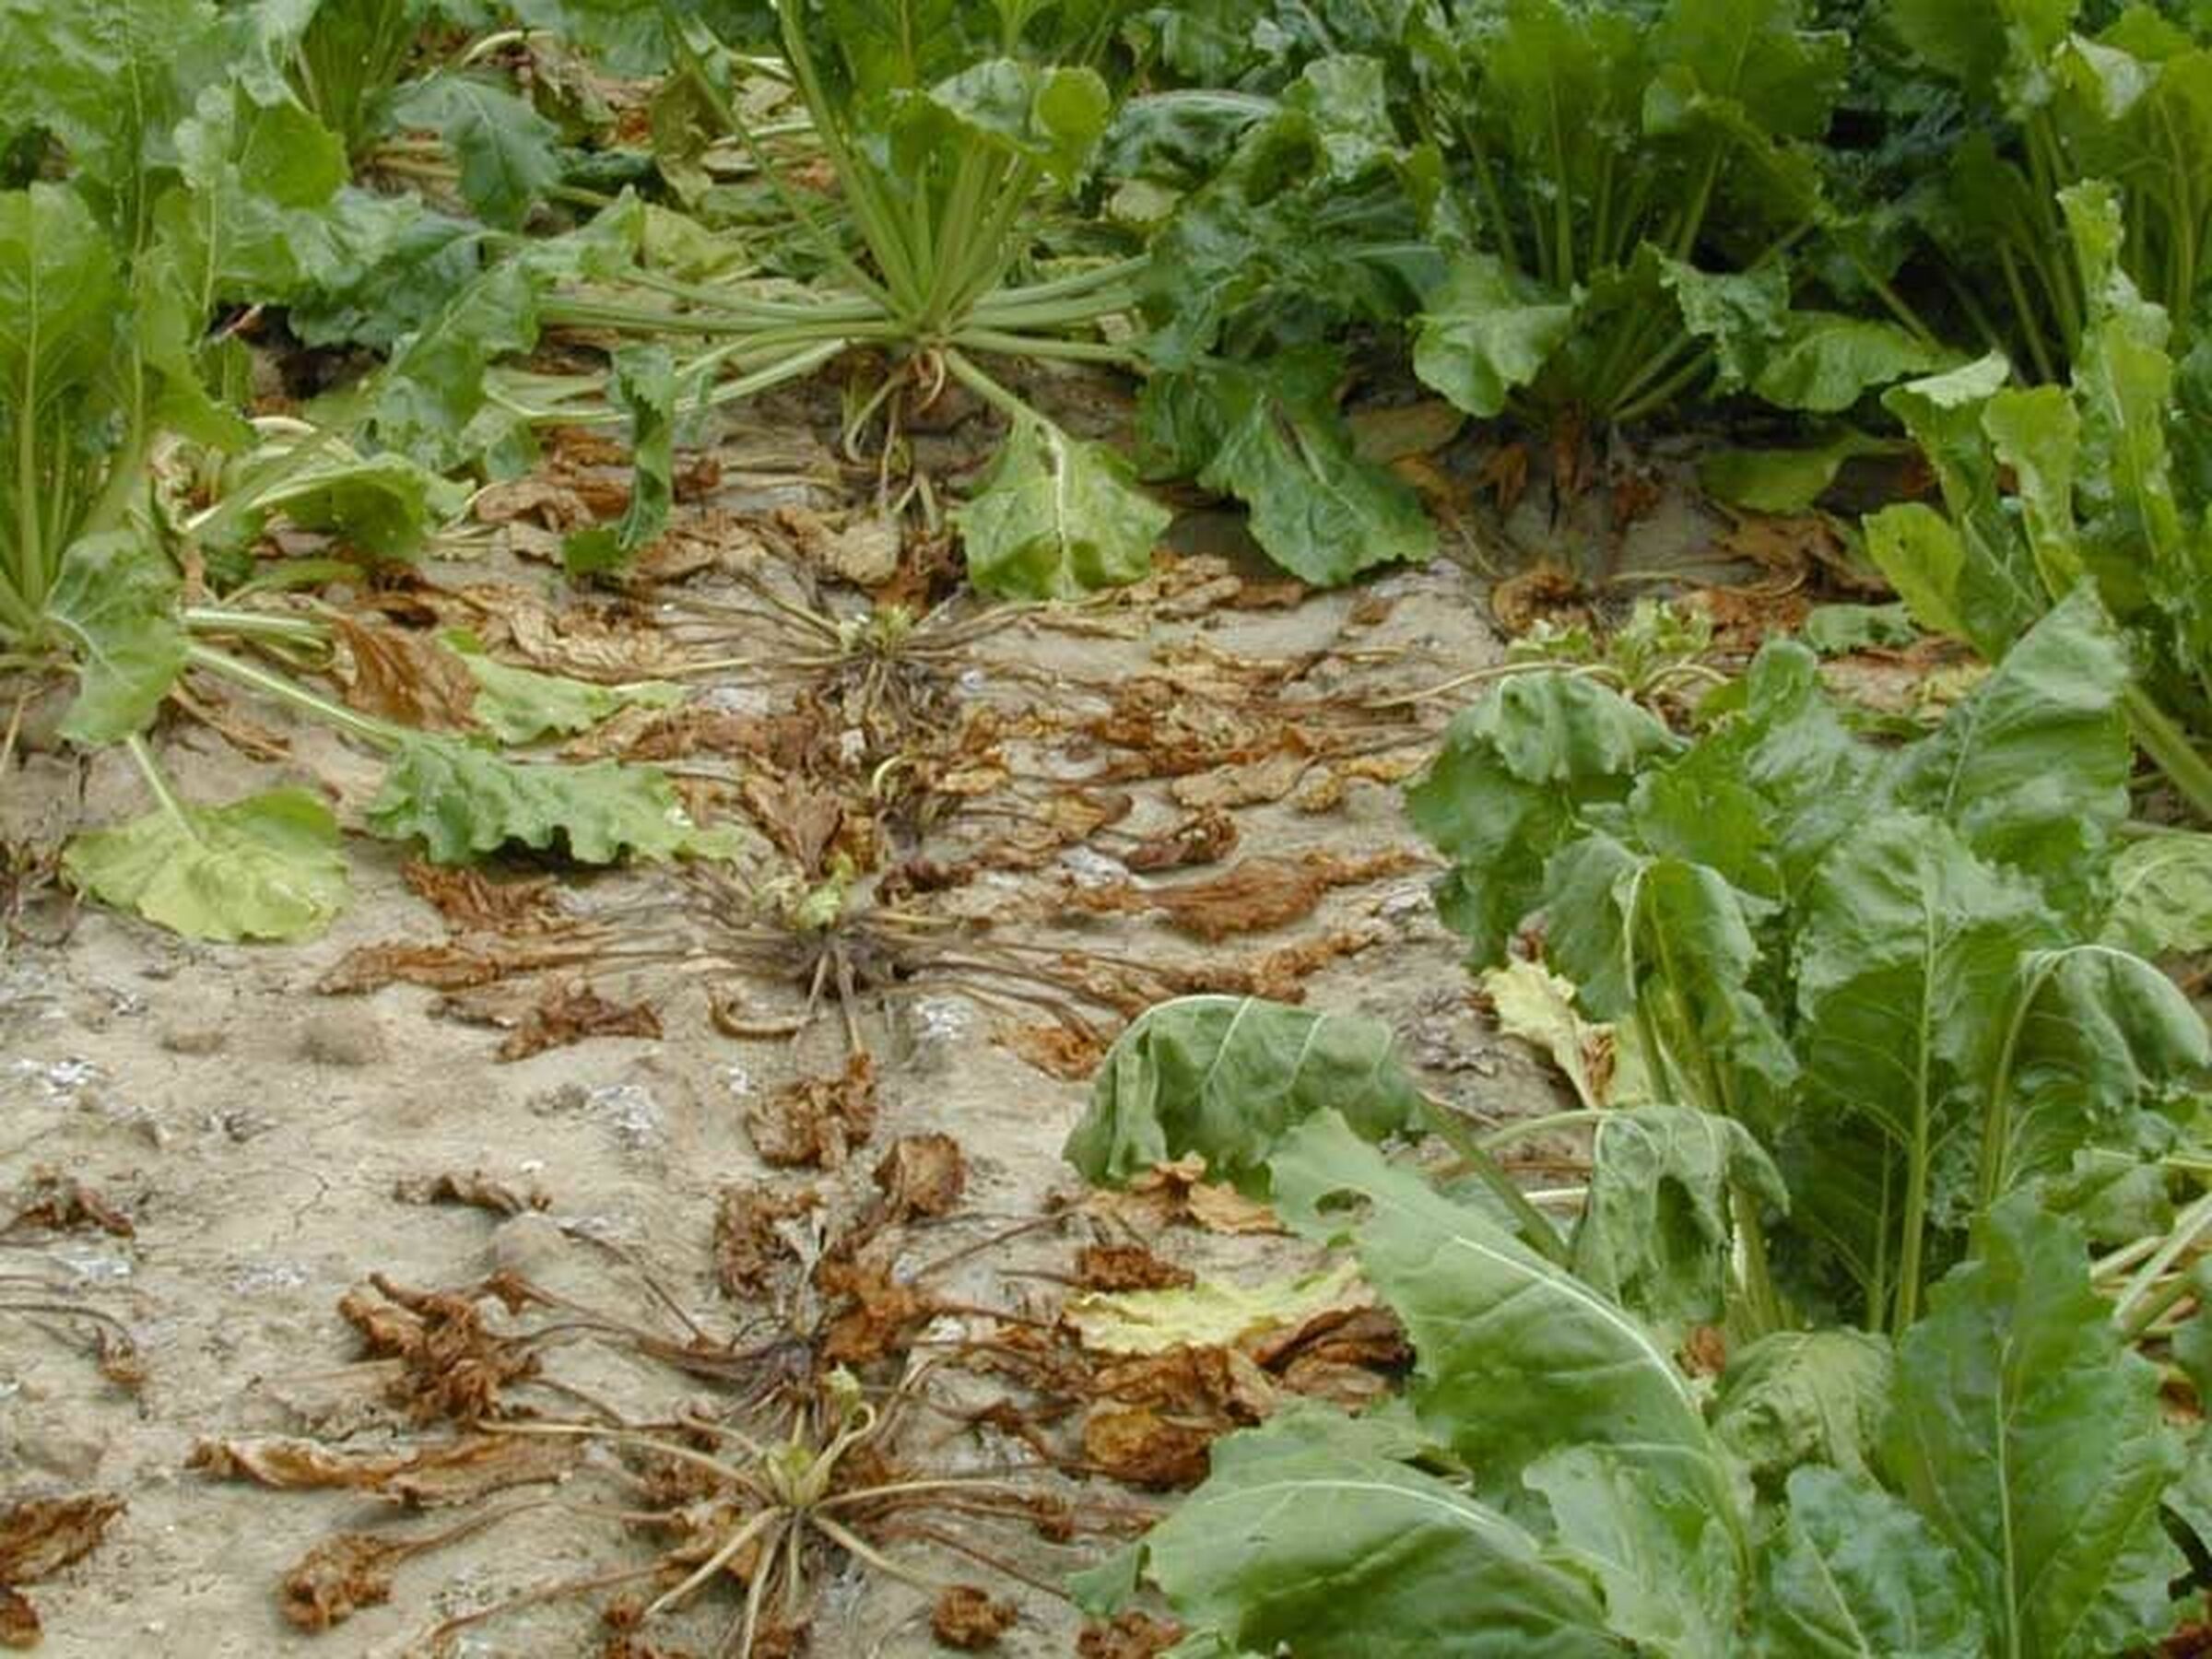 SESVanderHave - sugar beet pests and diseases - rhizoctonia in a sugar beet field, wilted leaves